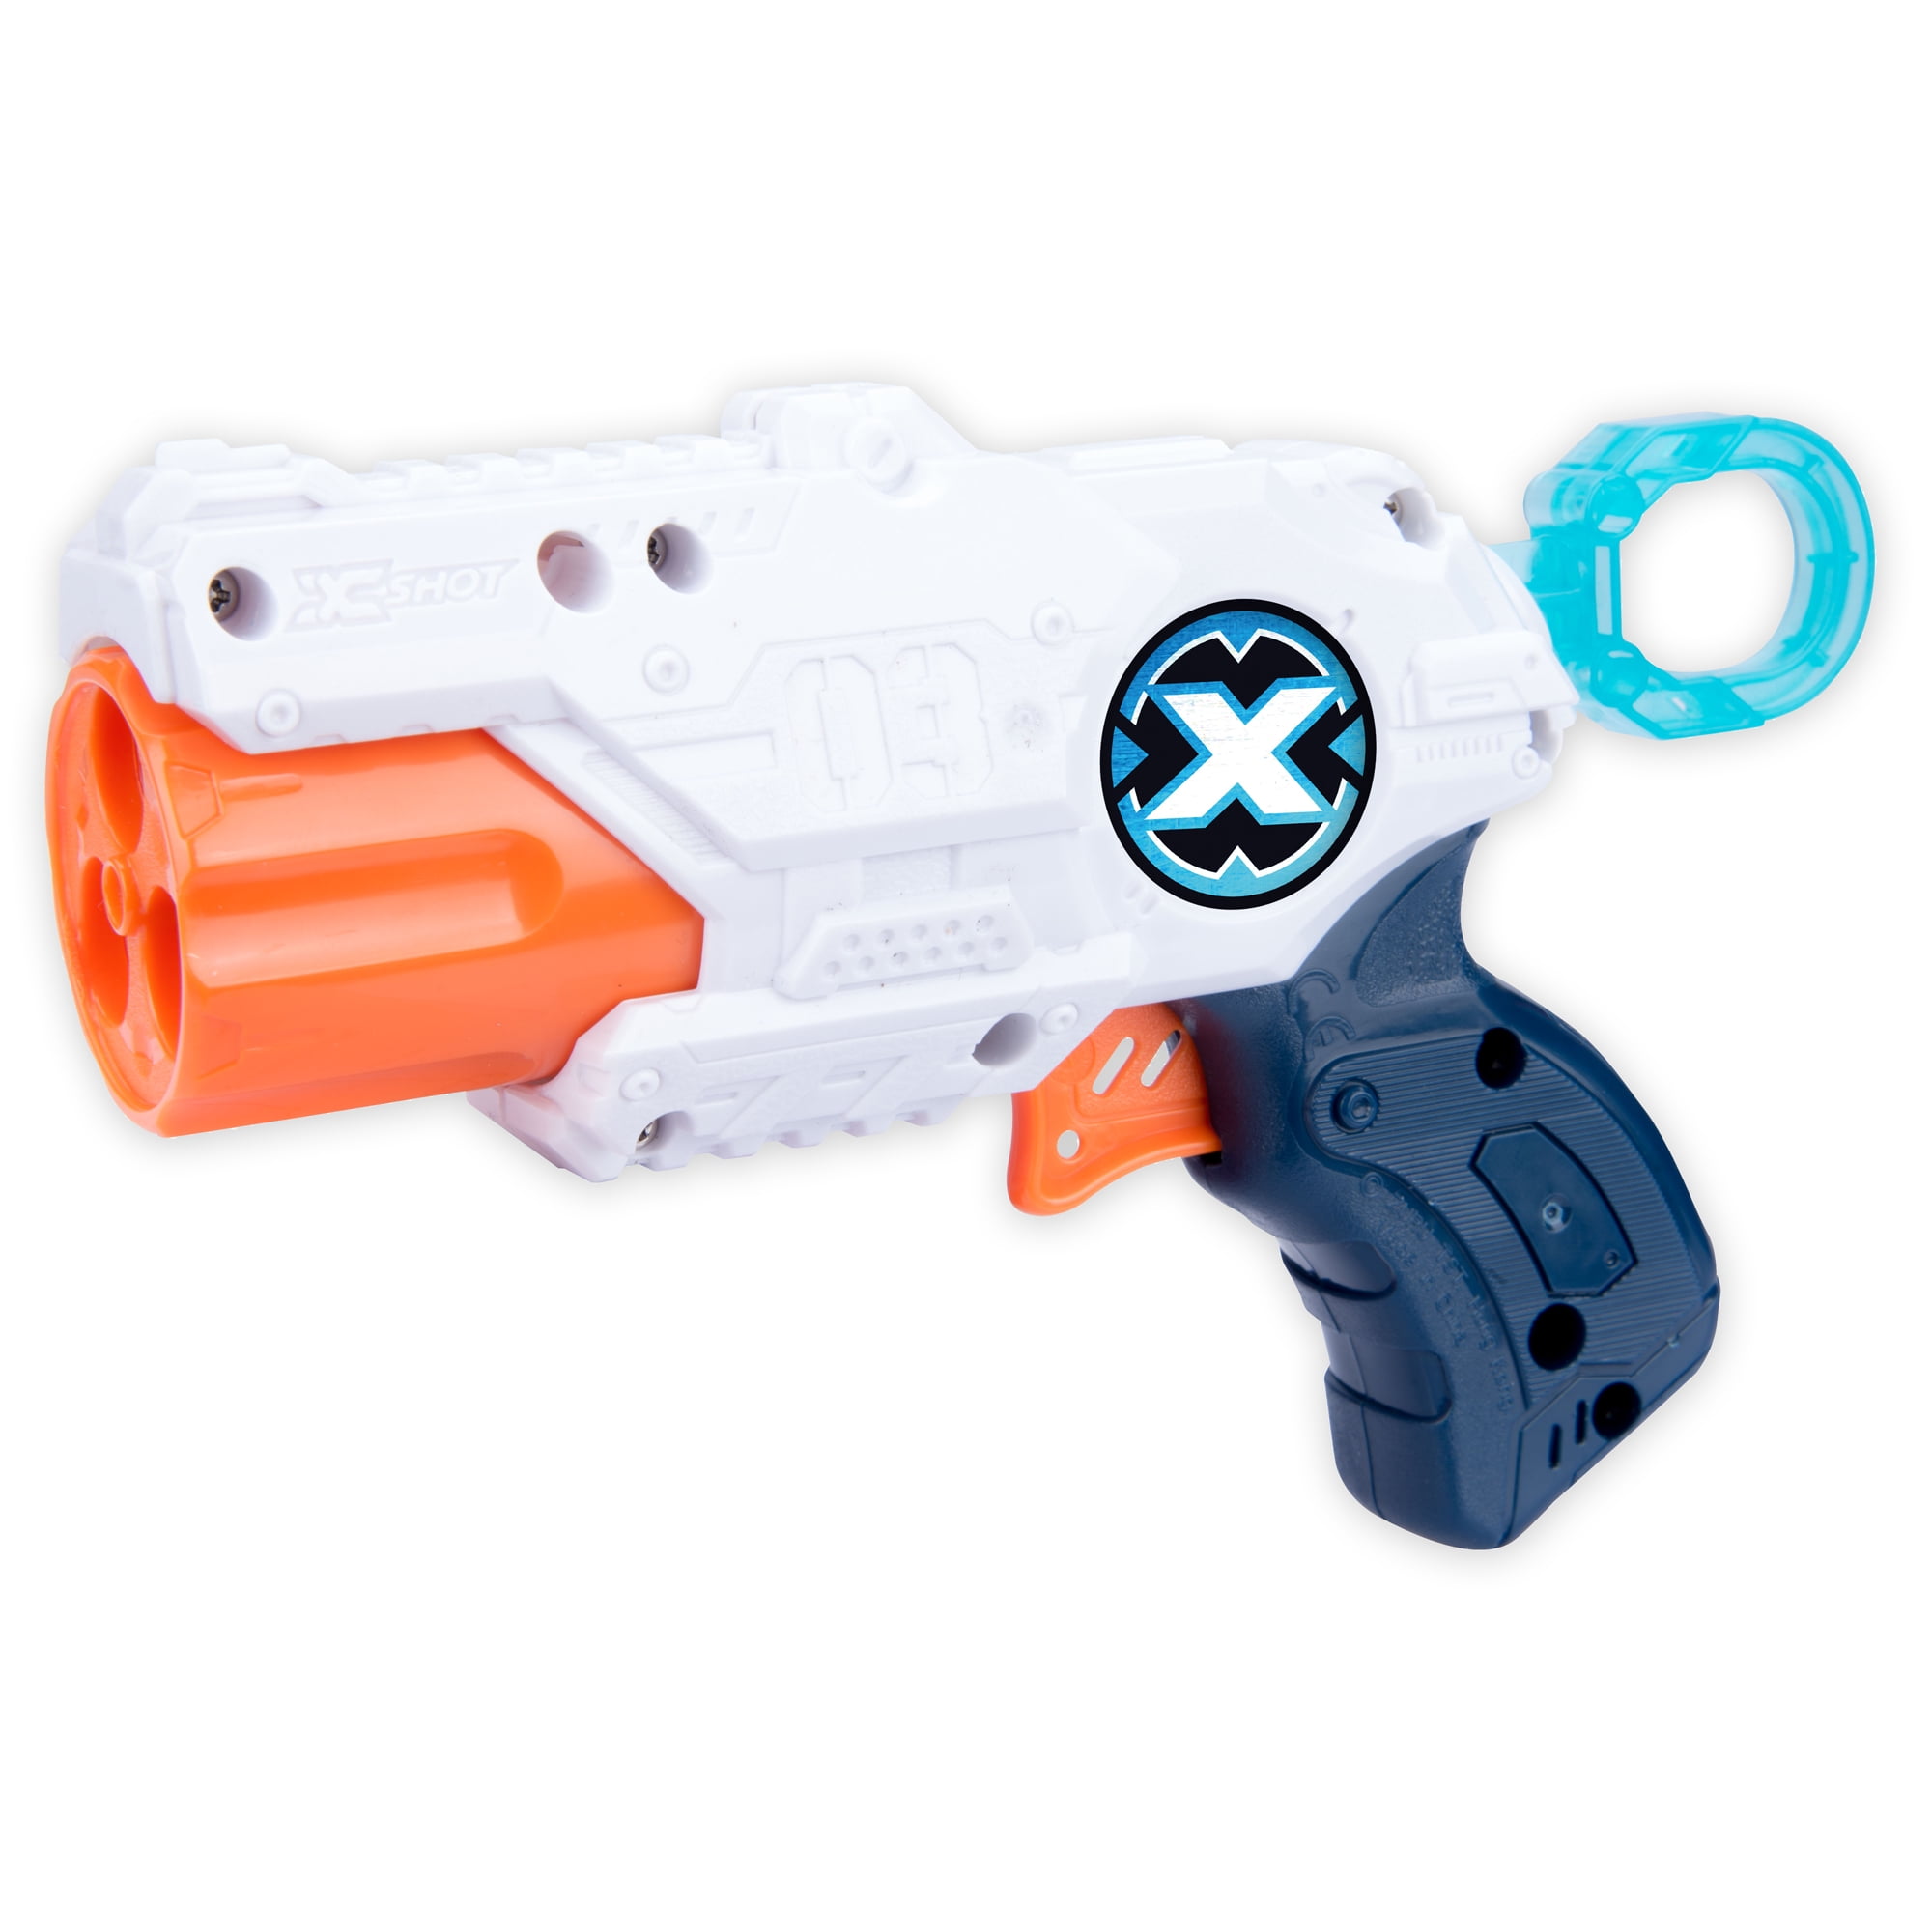 Zuru X Shot Excel Reflex Revolver TK 6 Gun Toy Dart Blaster Set New in Box NIB